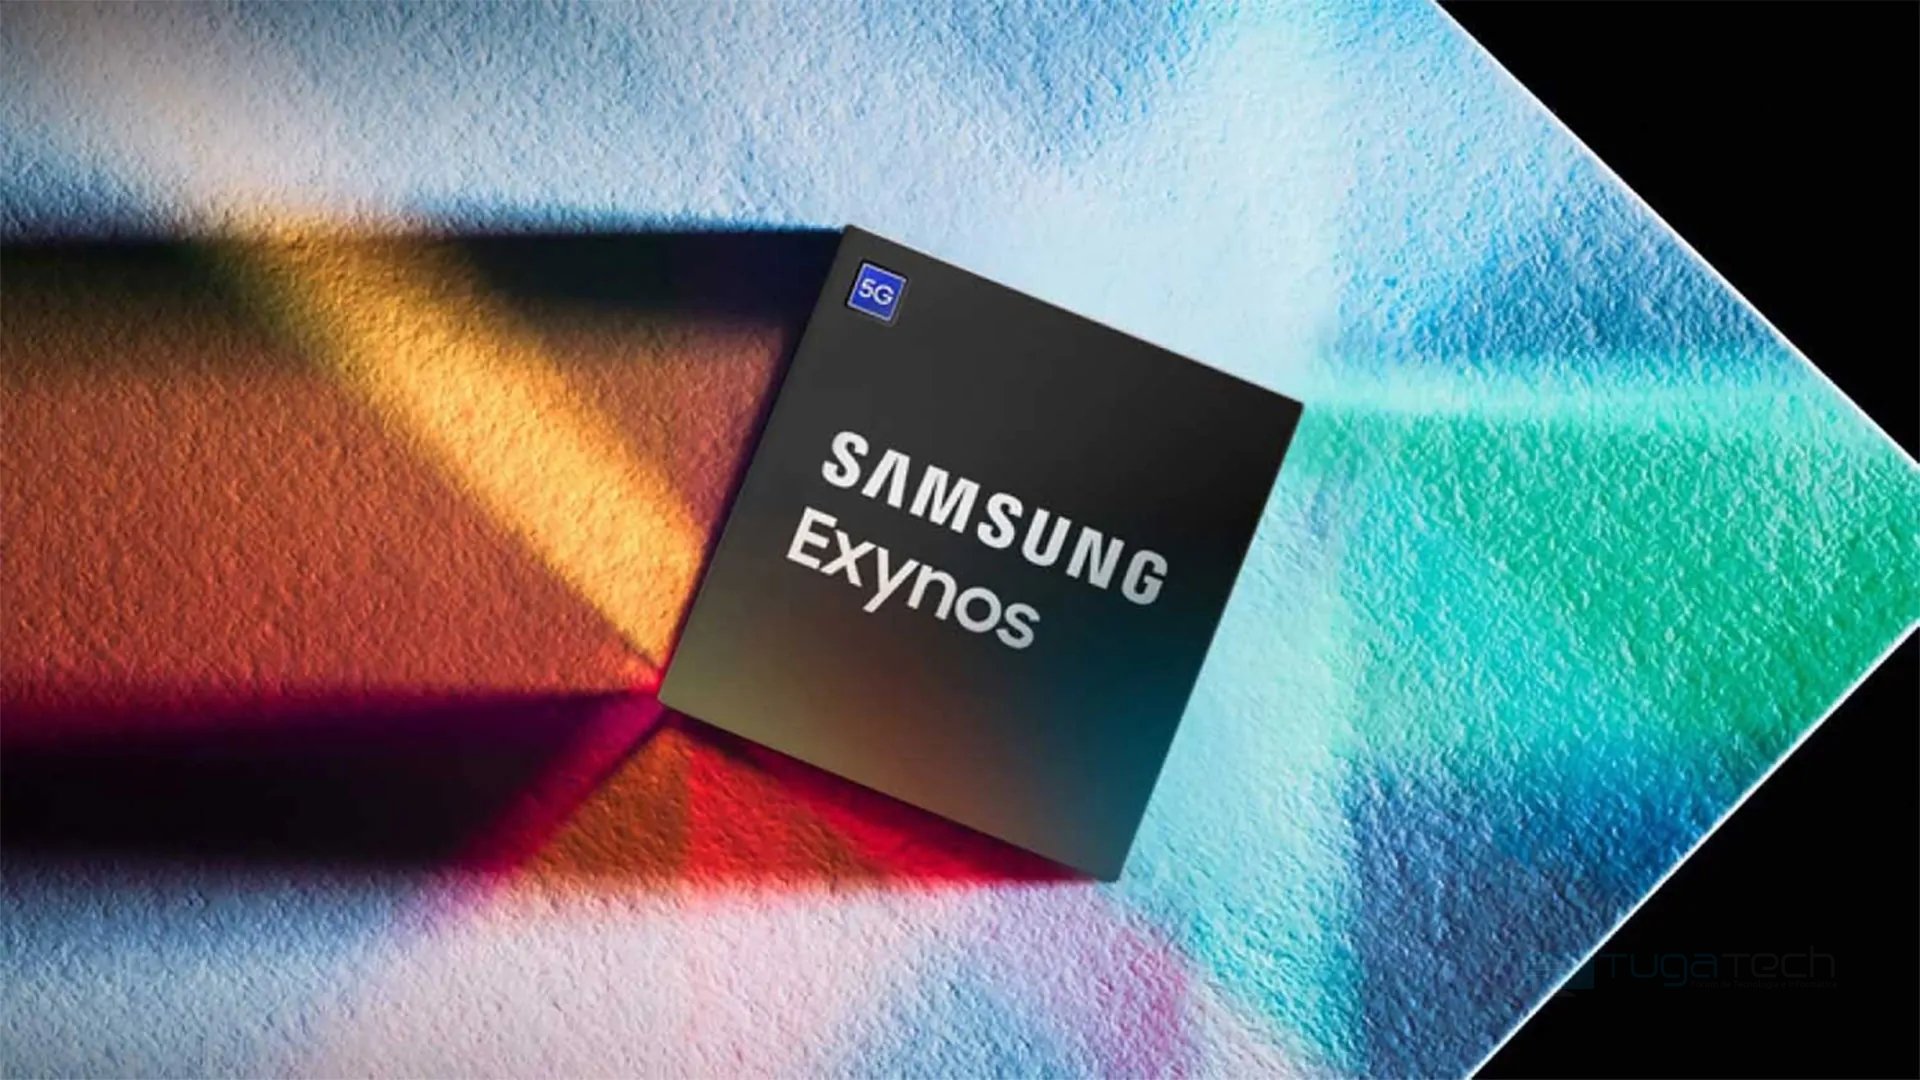 Samsung chip exynos